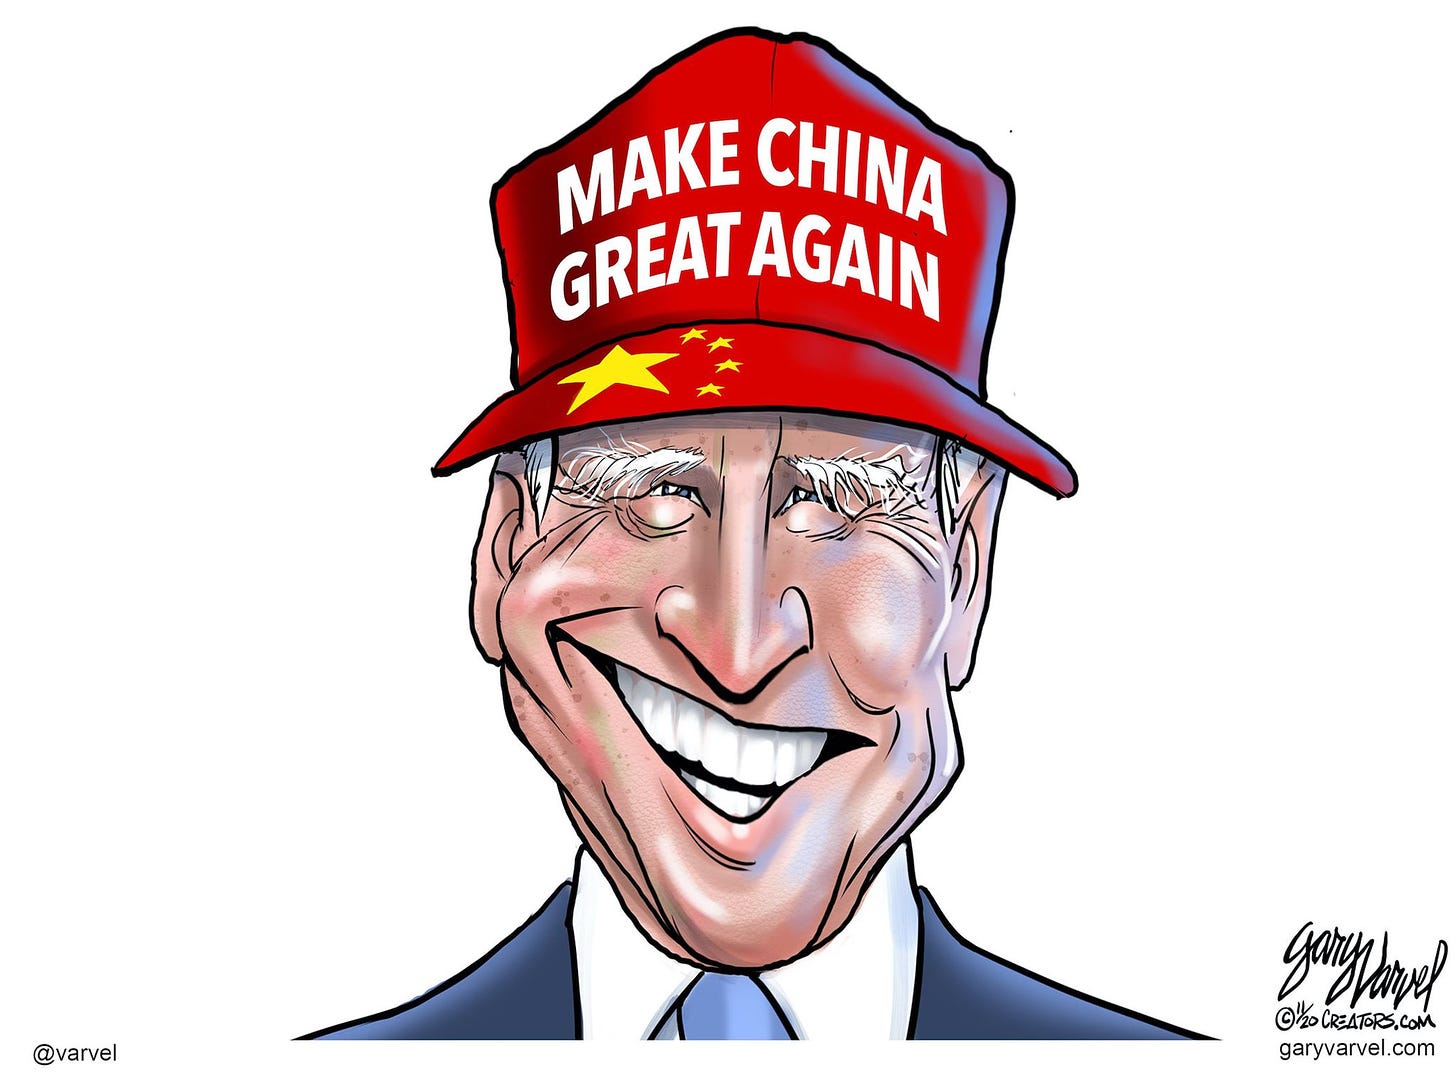 Political Cartoons - Tooning into Sleepy Joe Biden - Make China Great Again  - Washington Times